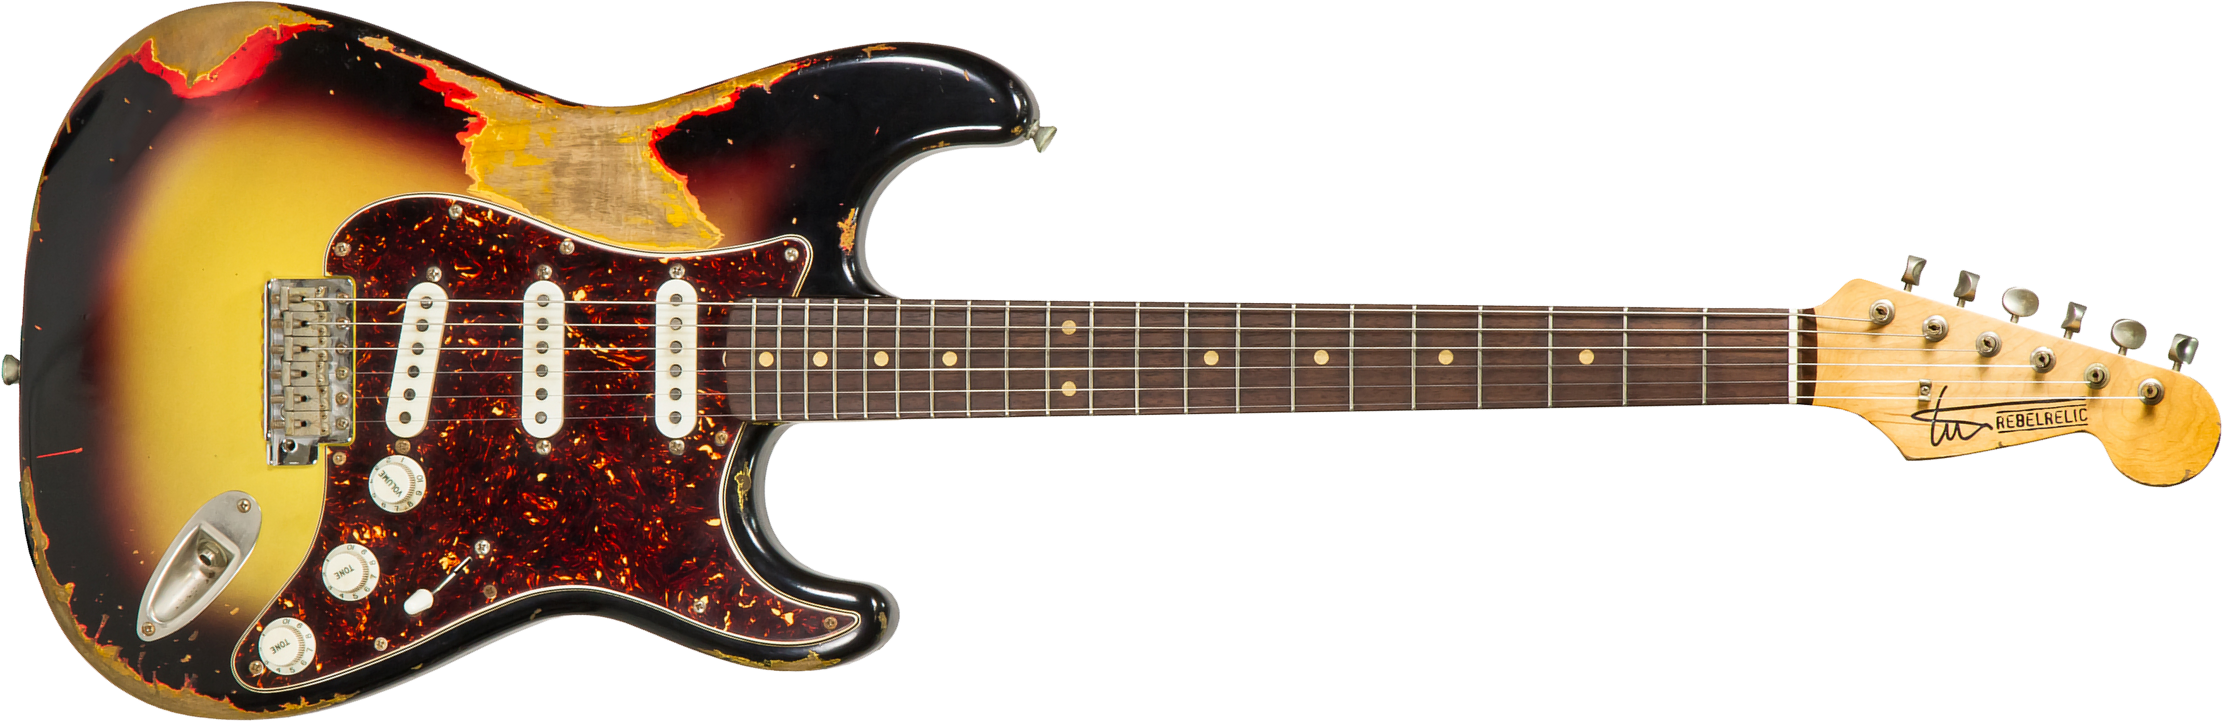 Rebelrelic S-series 62 Rw #62110 - Heavy Aging 3-tone Sunburst - Guitarra eléctrica con forma de str. - Main picture